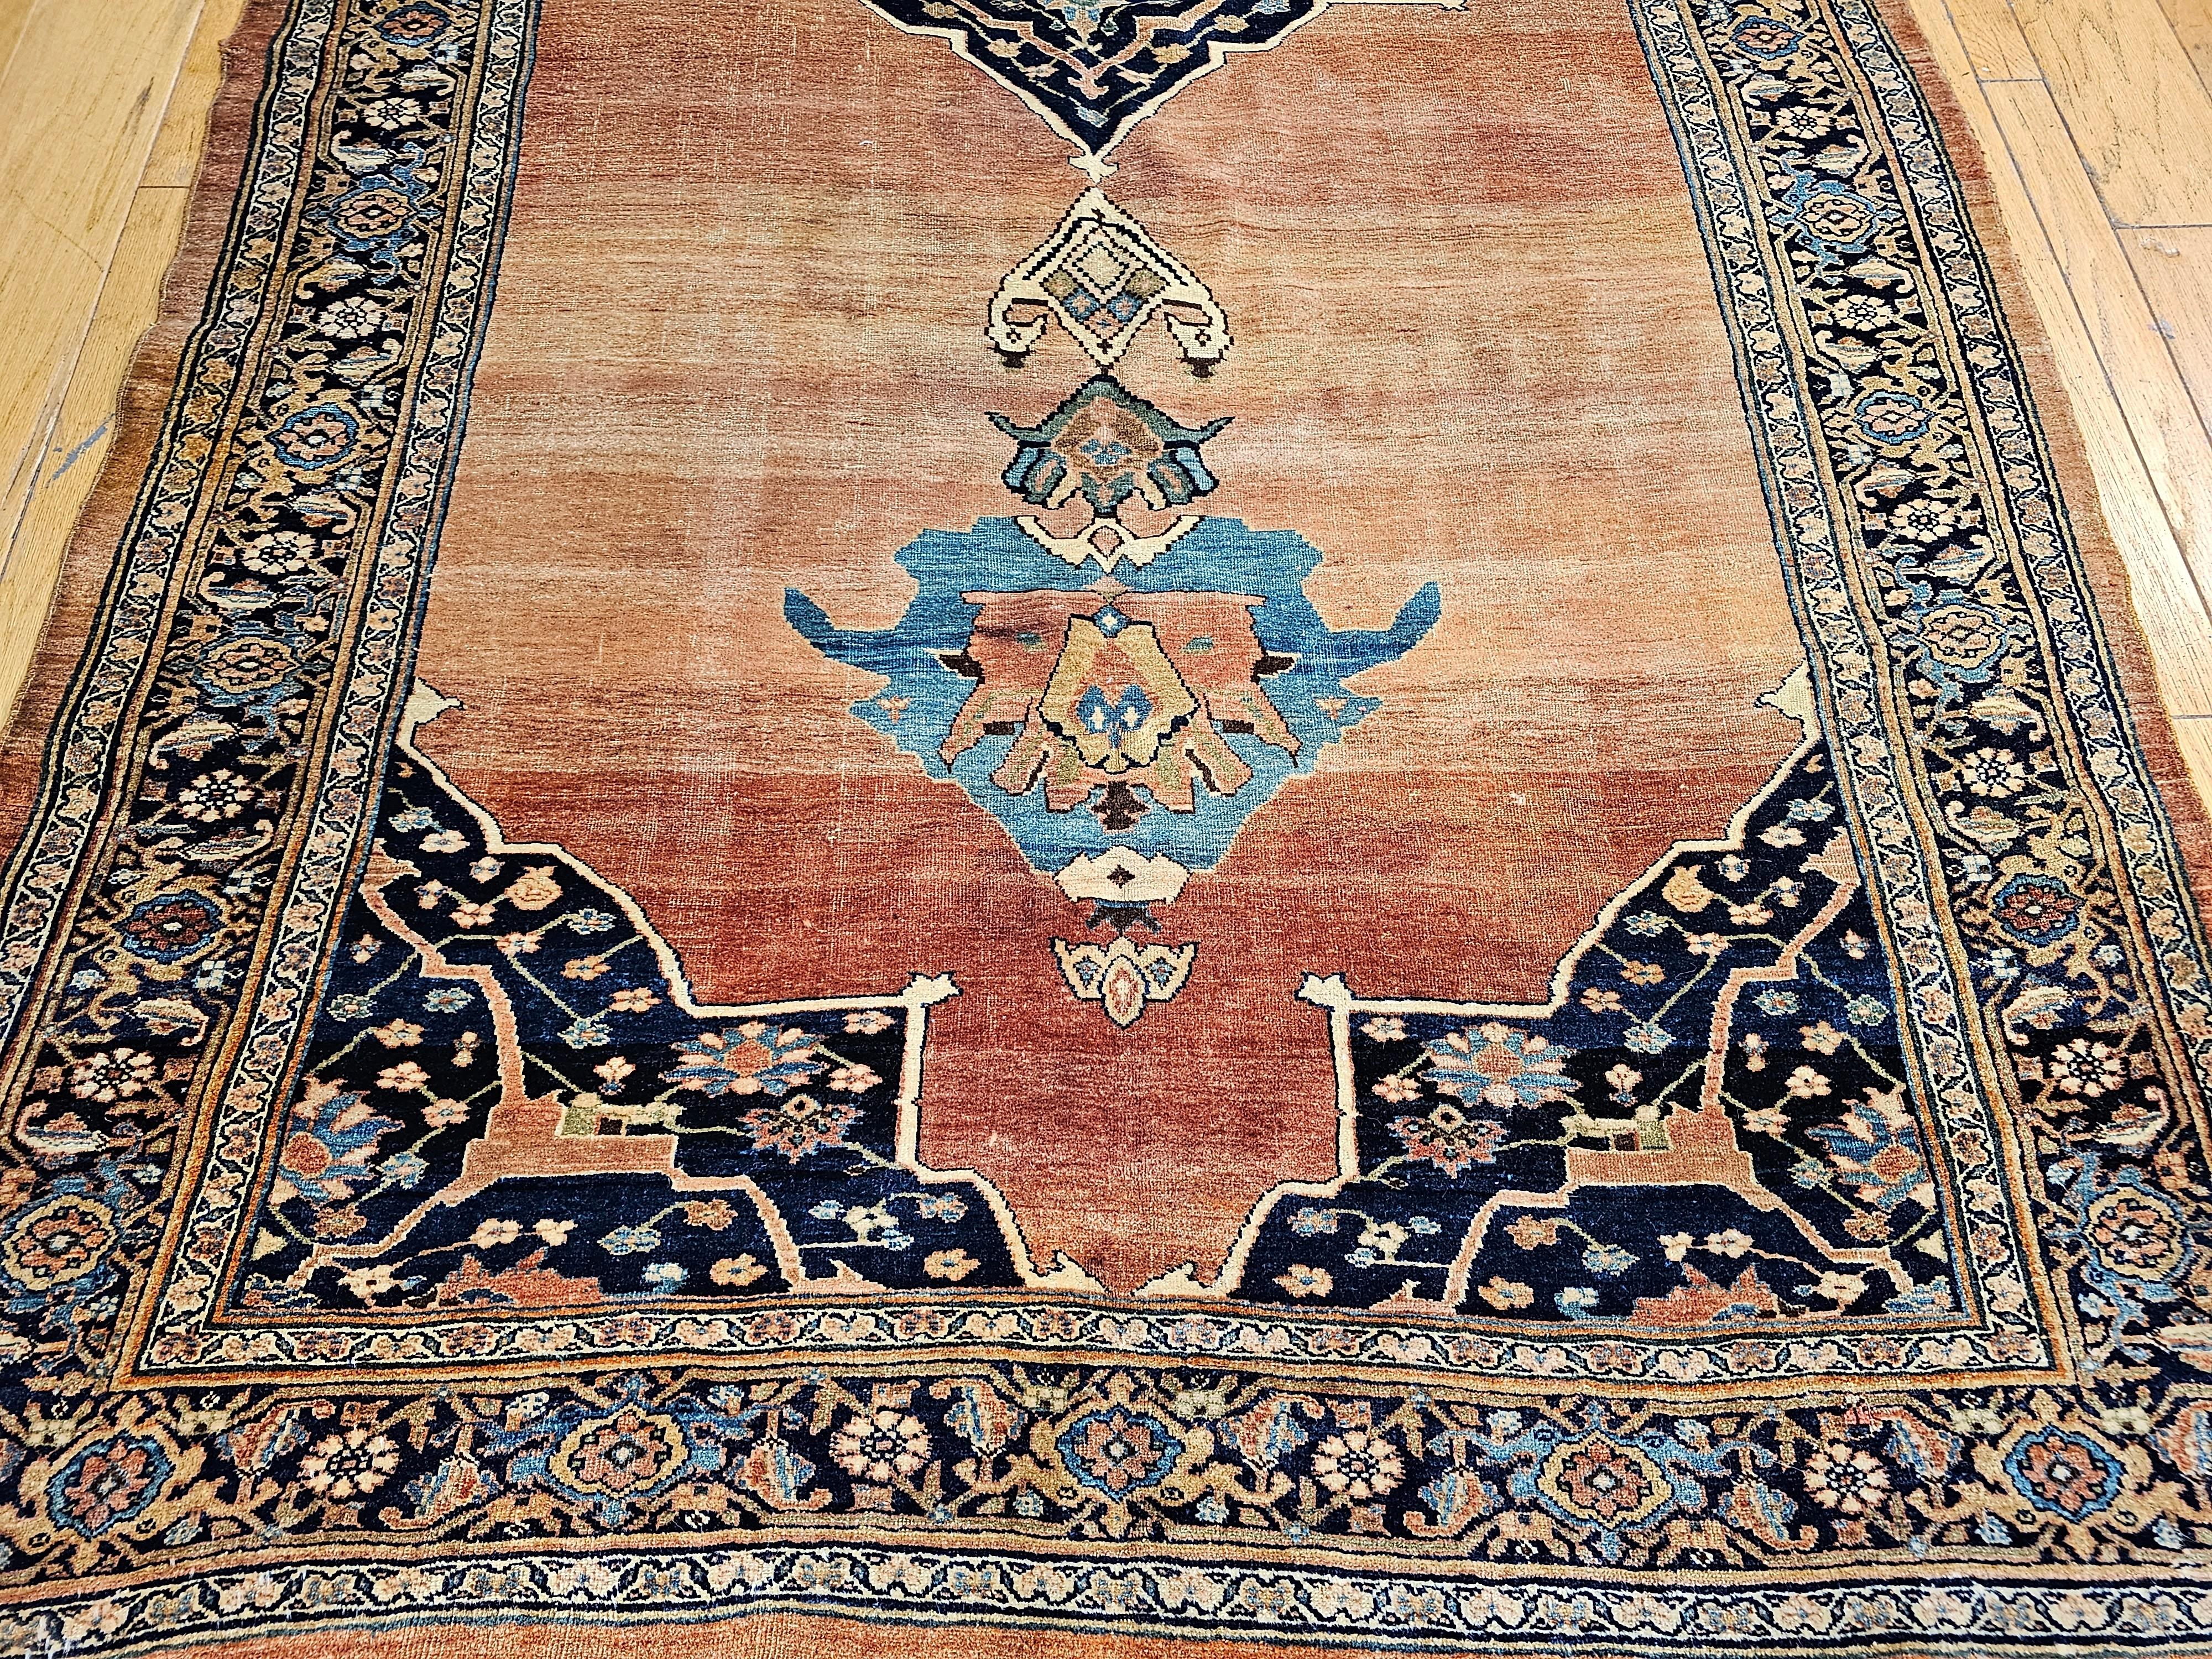 Wool 19th Century Persian Bidjar Gallery Rug in Brick-Red, Navy, Turquoise, Yellow For Sale